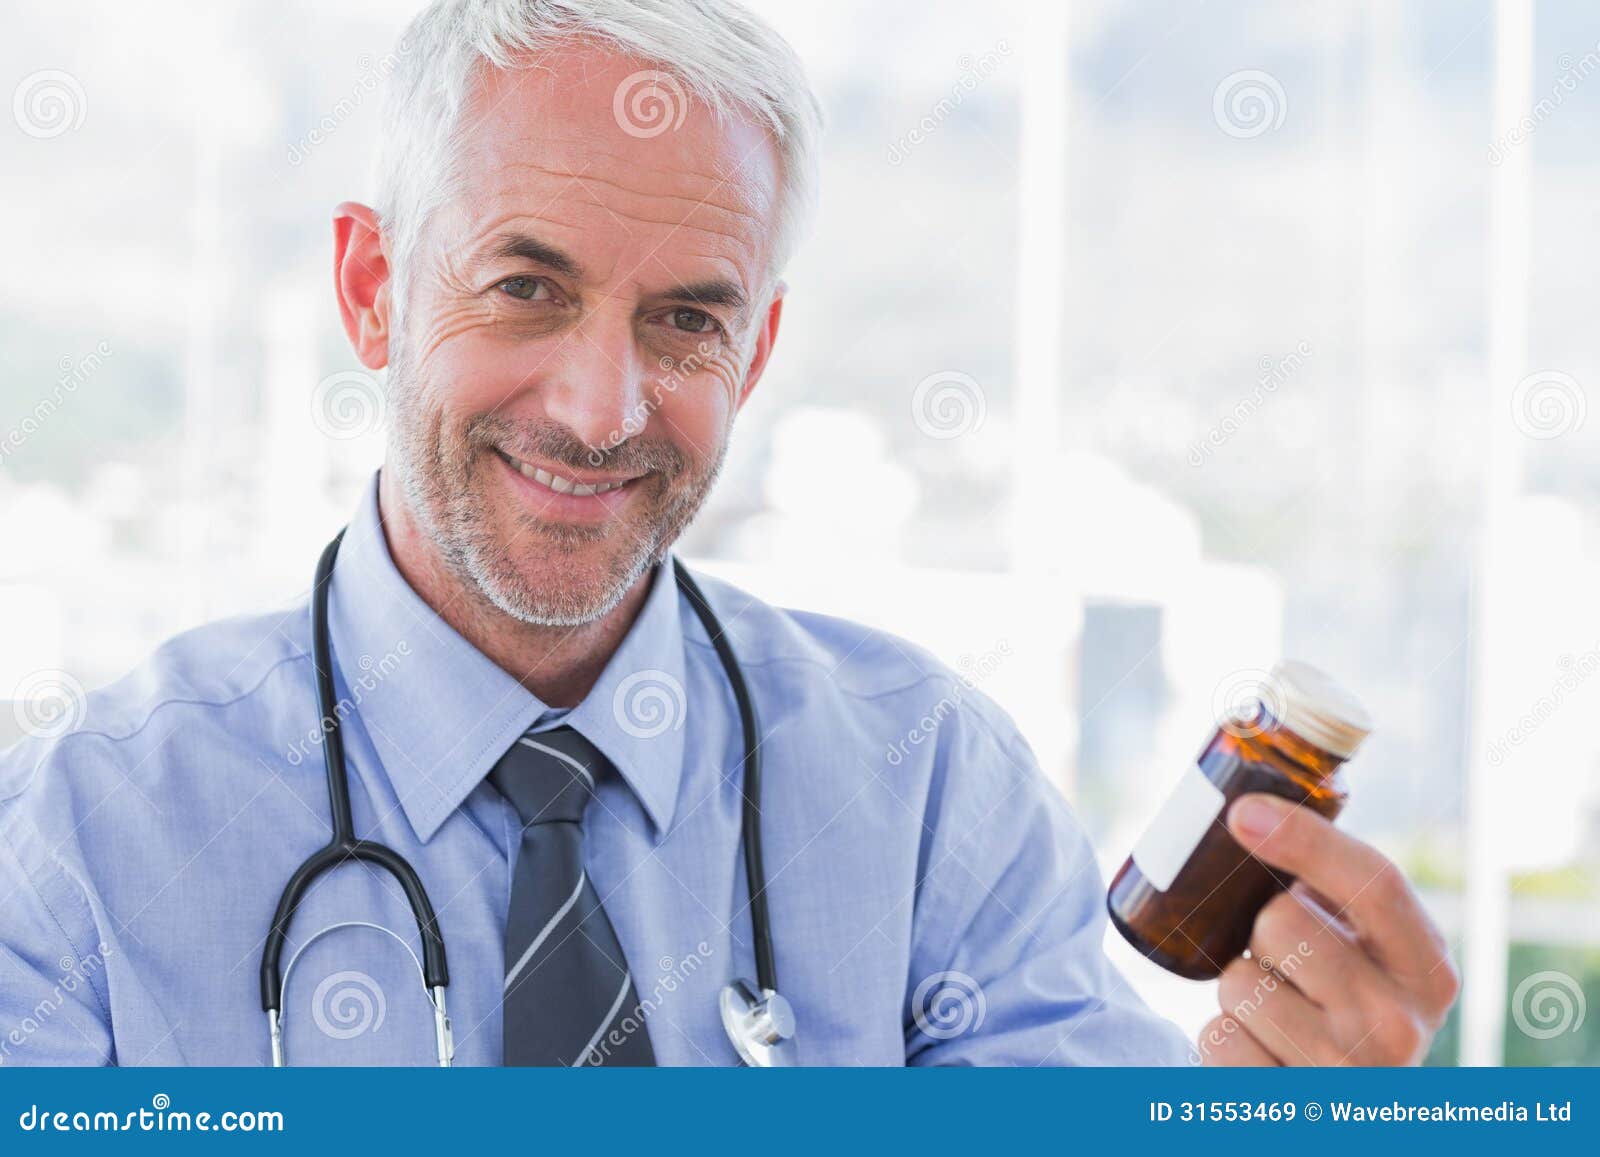 Smiling Doctor Holding Medicine Jar Stock Image - Image of happy ...